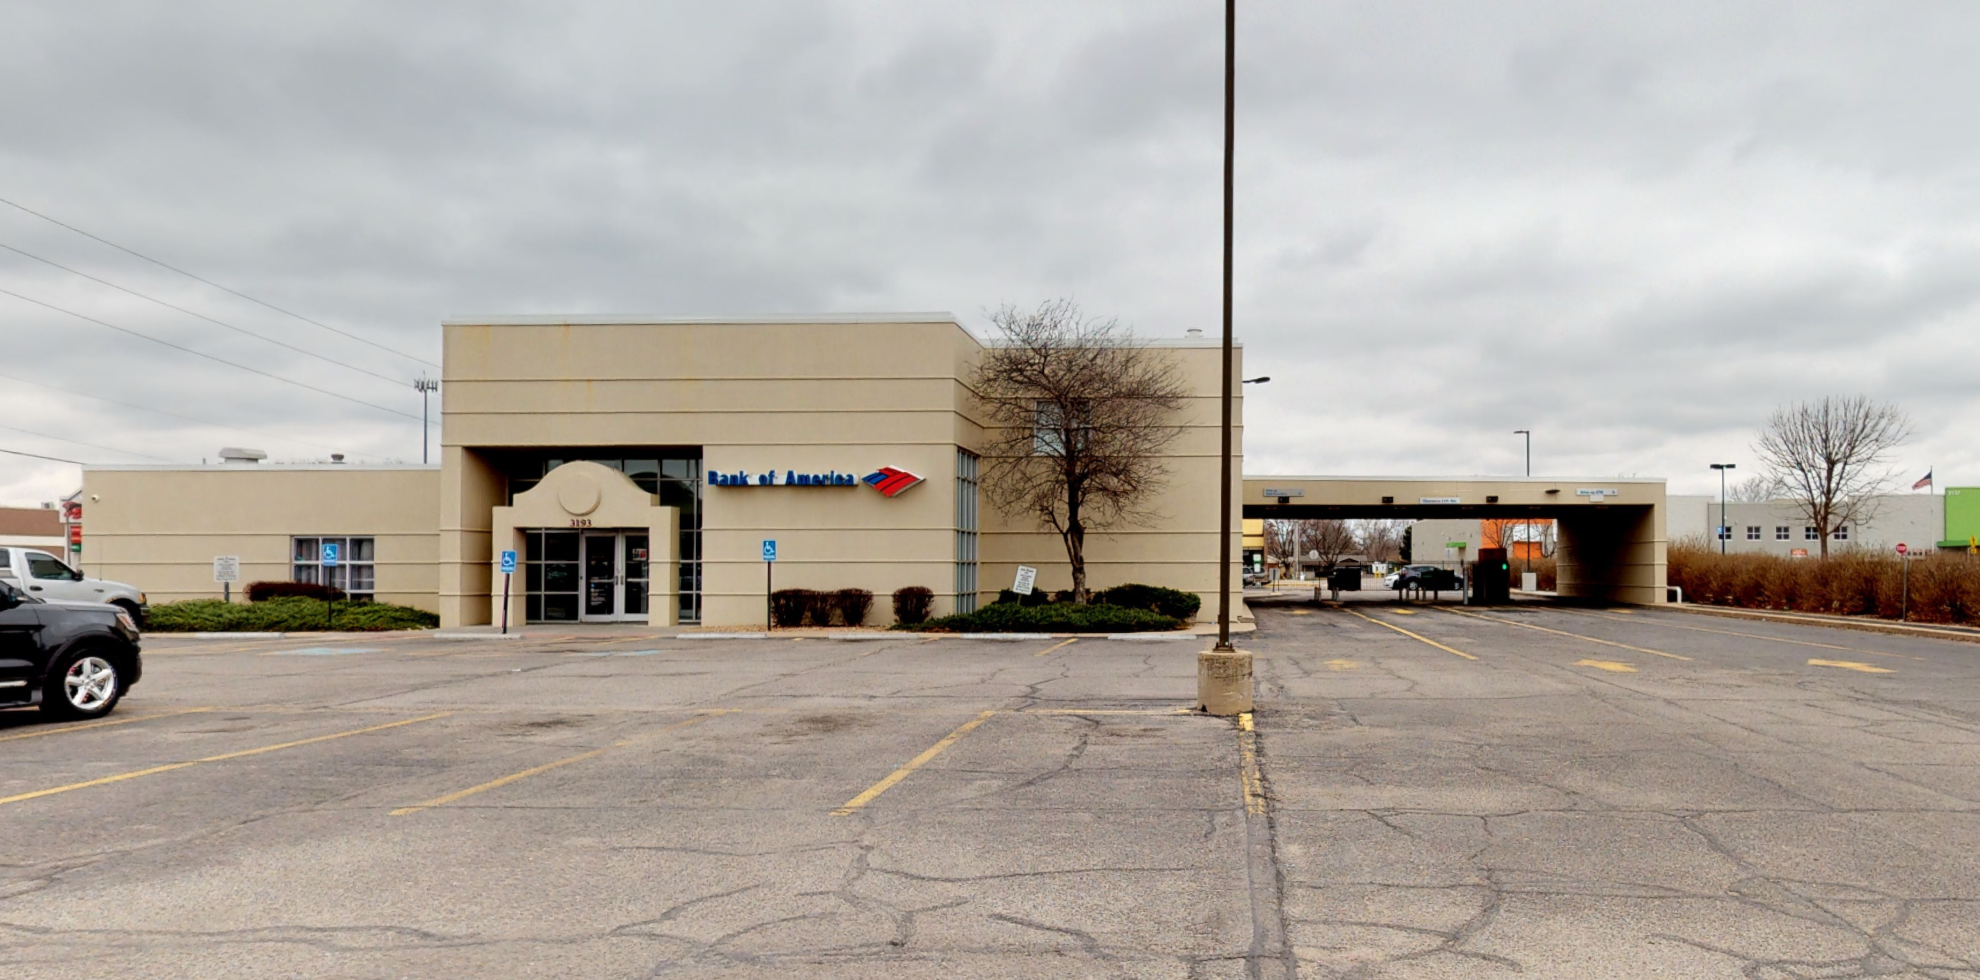 Bank of America financial center with drive-thru ATM | 3193 S Seneca St, Wichita, KS 67217